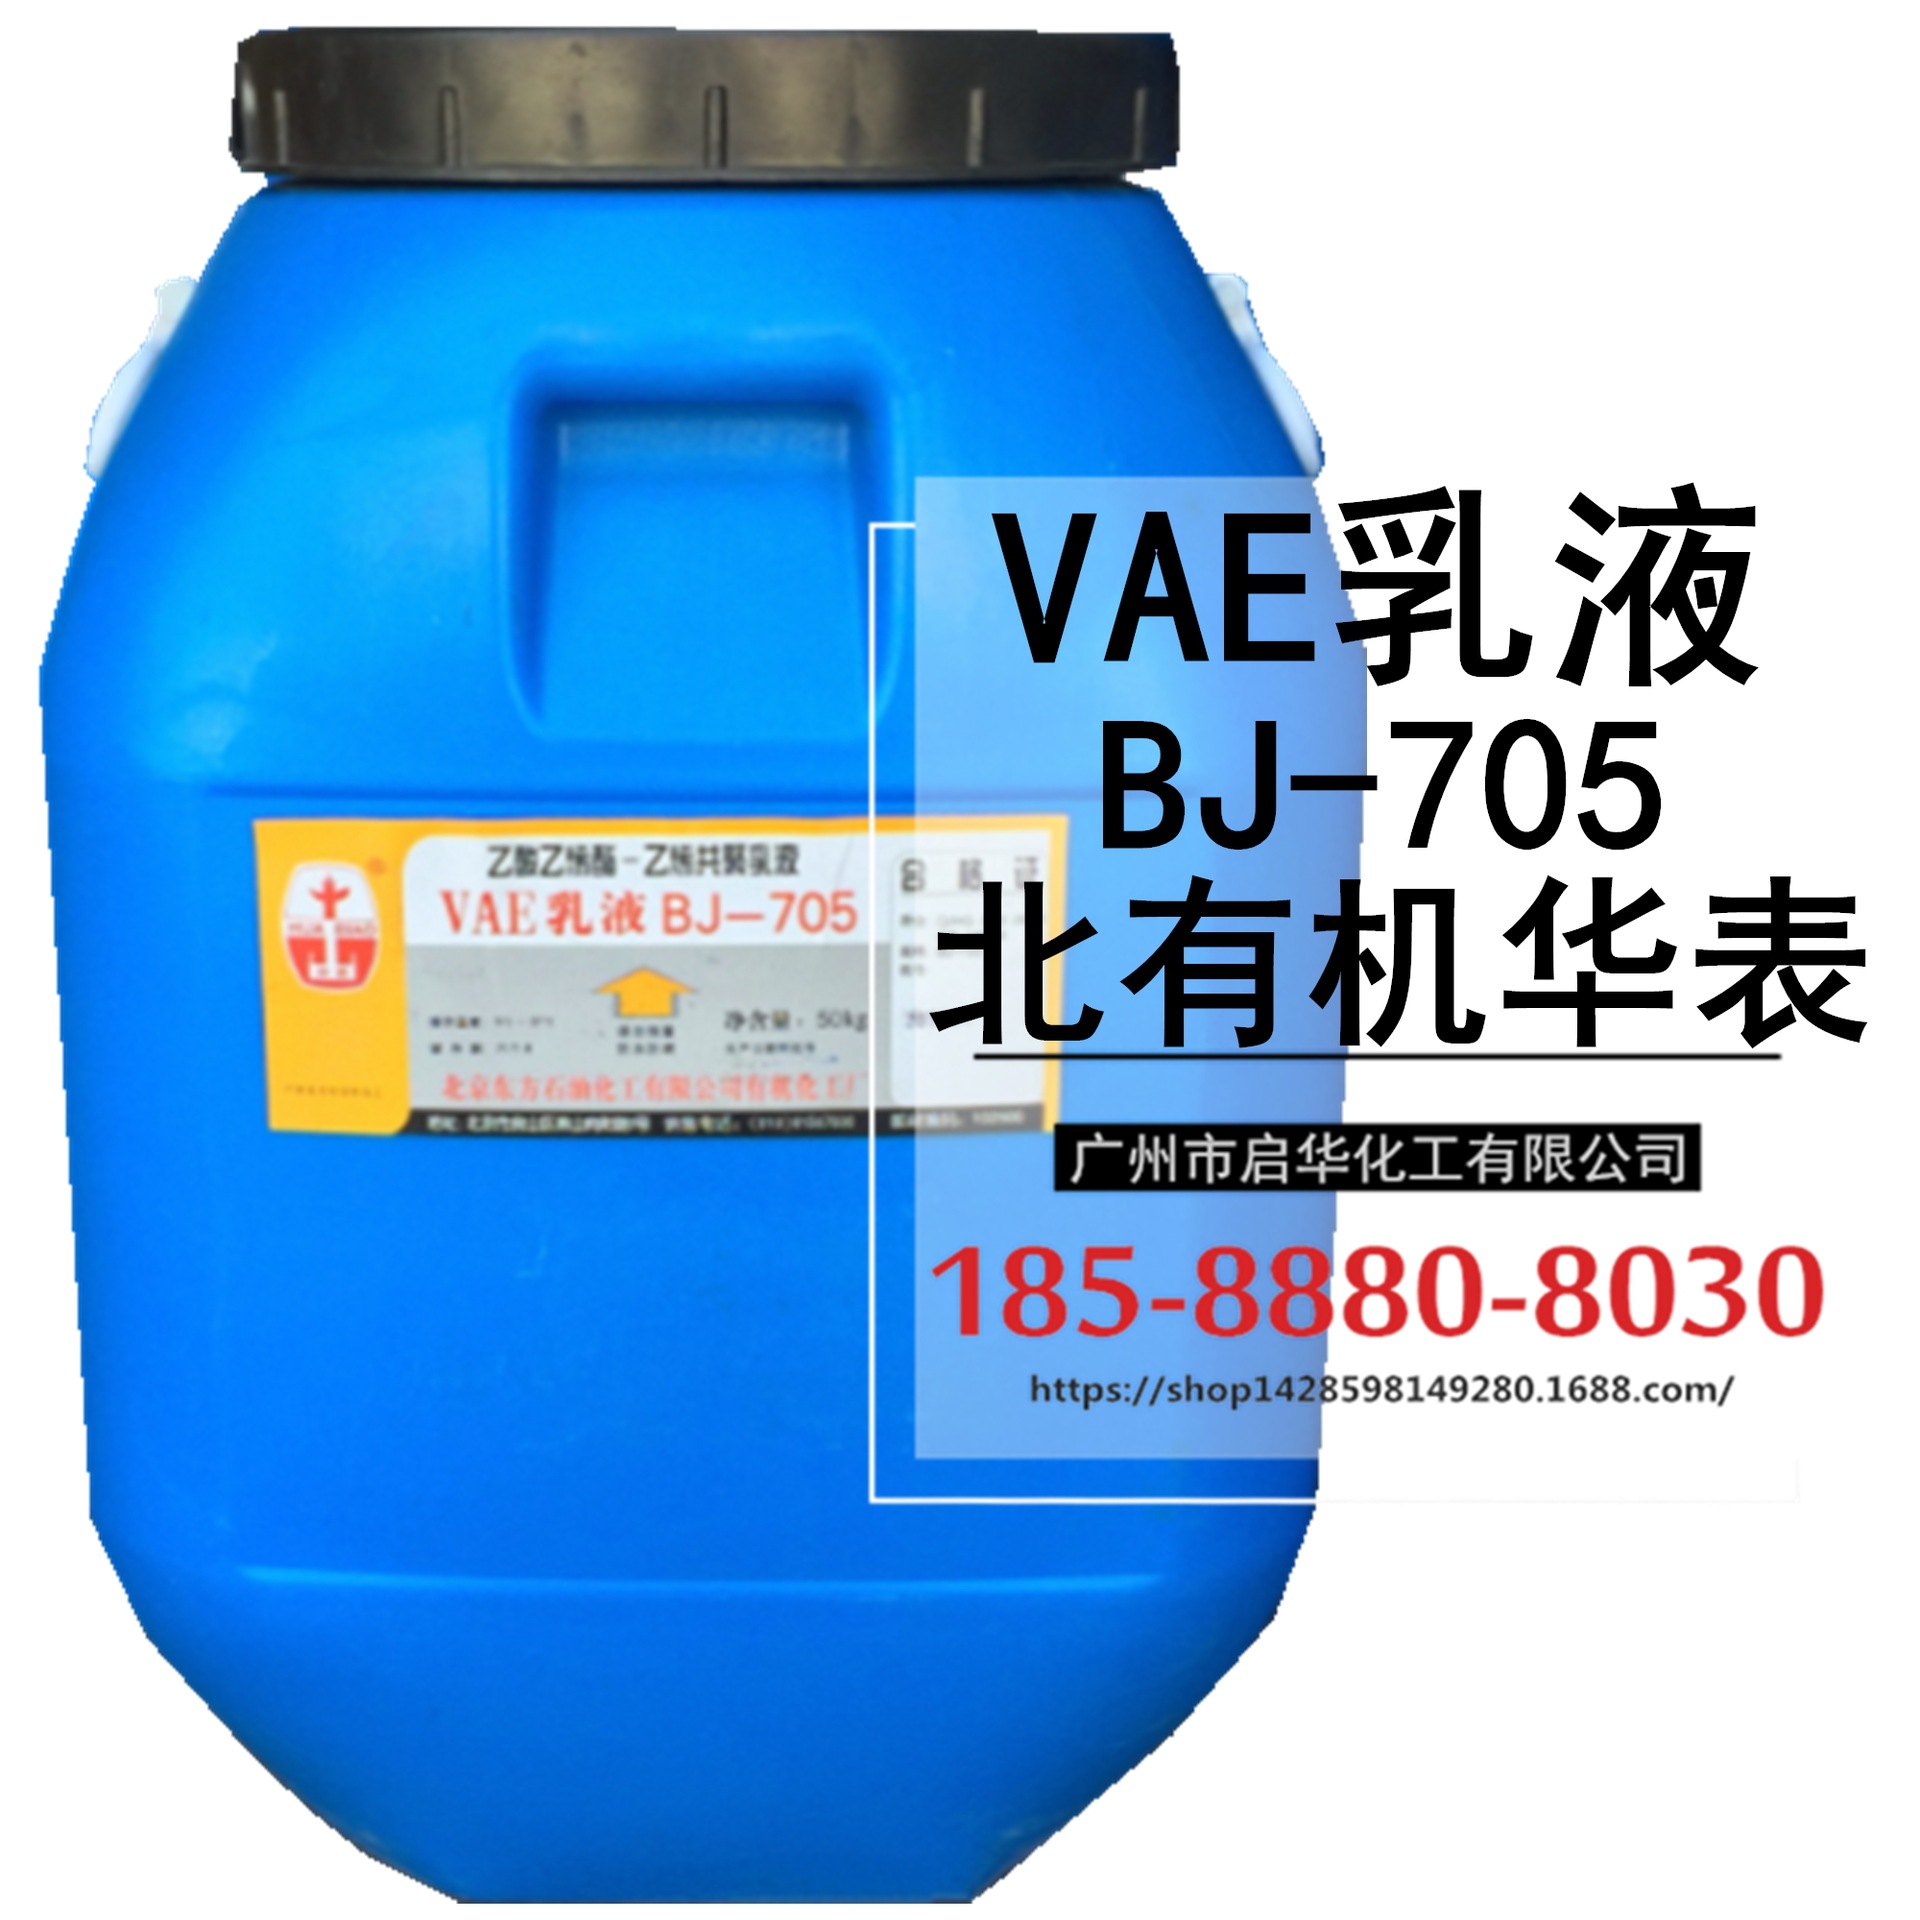 High viscosity VAE waterproof Architecture Lotion Beijing 705VAE Lotion vinyl acetate copolymerization Lotion